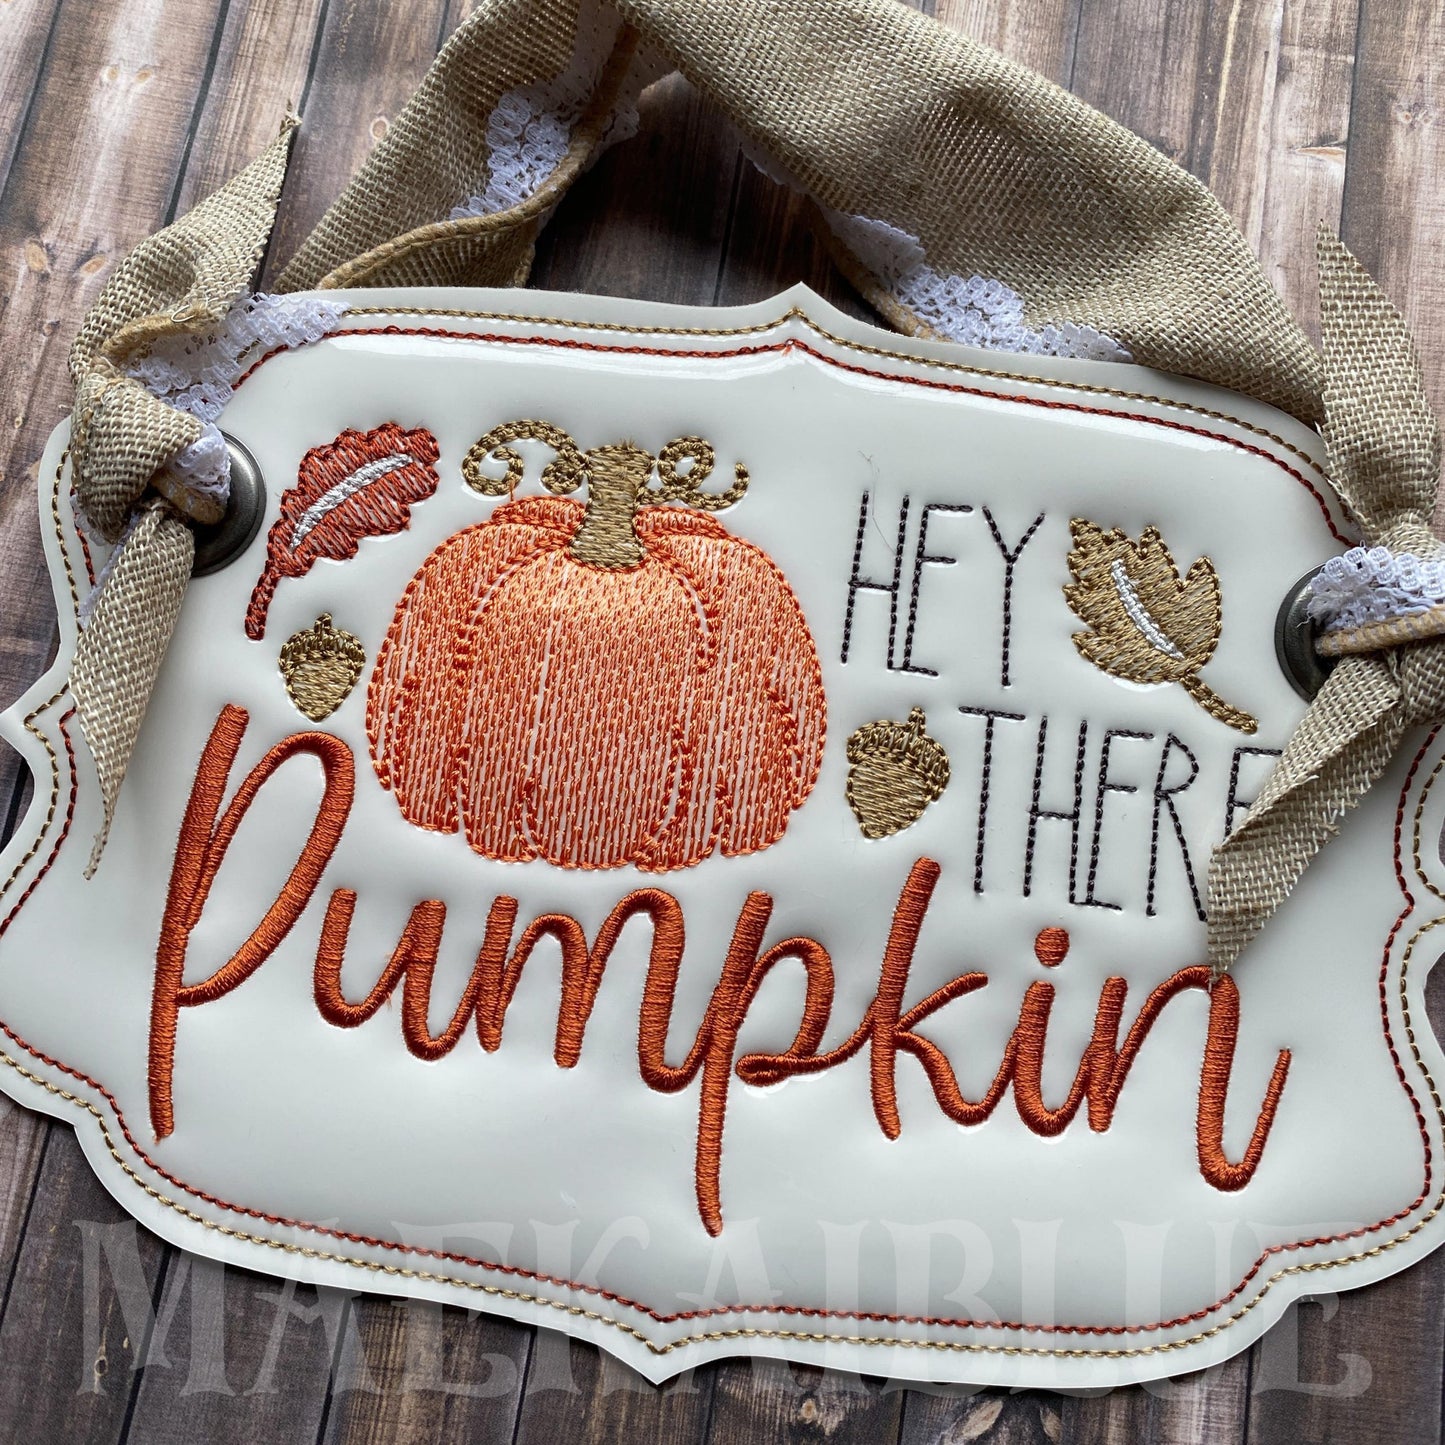 Hey There Pumpkin Door Sign - 3 sizes - Digital Embroidery Design